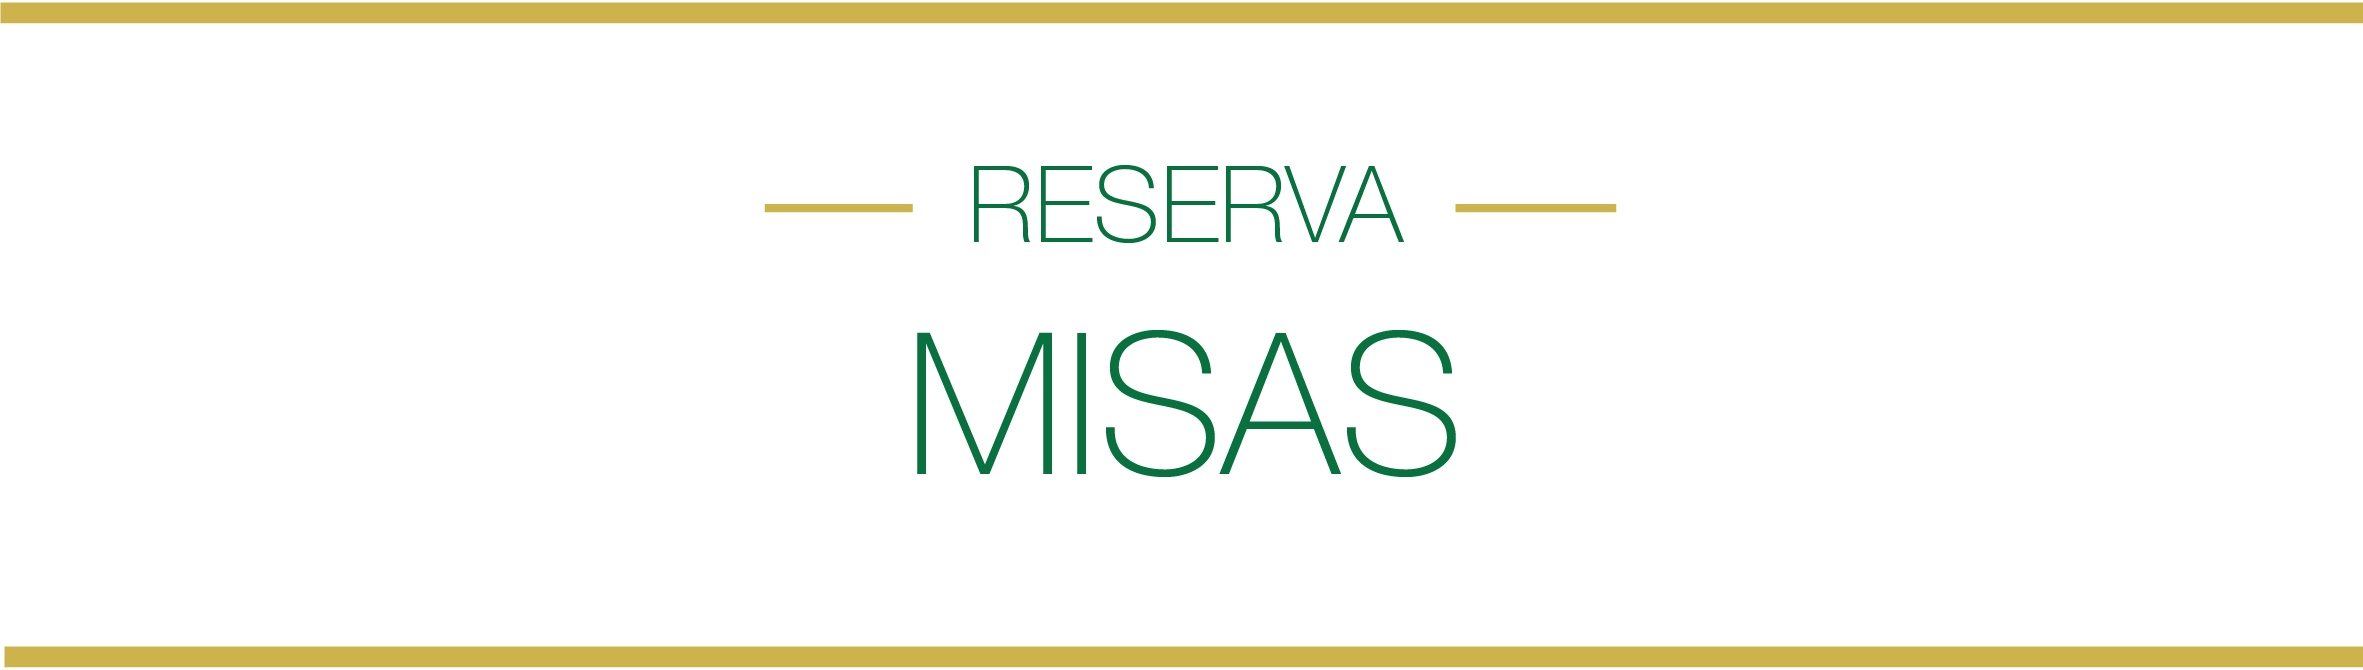 reserva misas